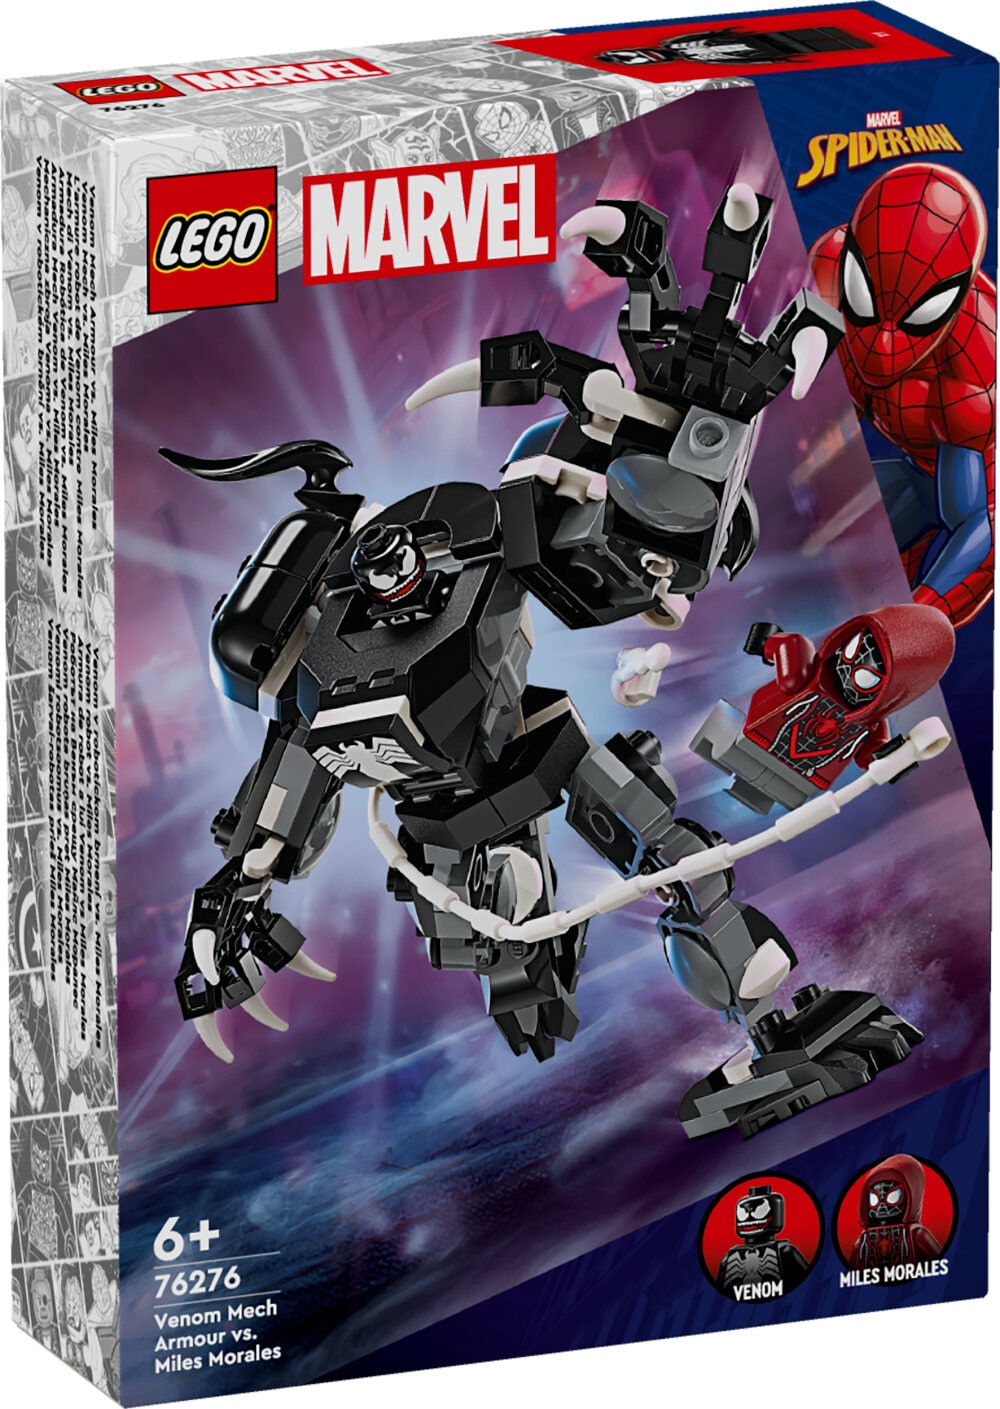 LEGO Marvel - Venom-robottiasu vastaan Miles Morales 6+